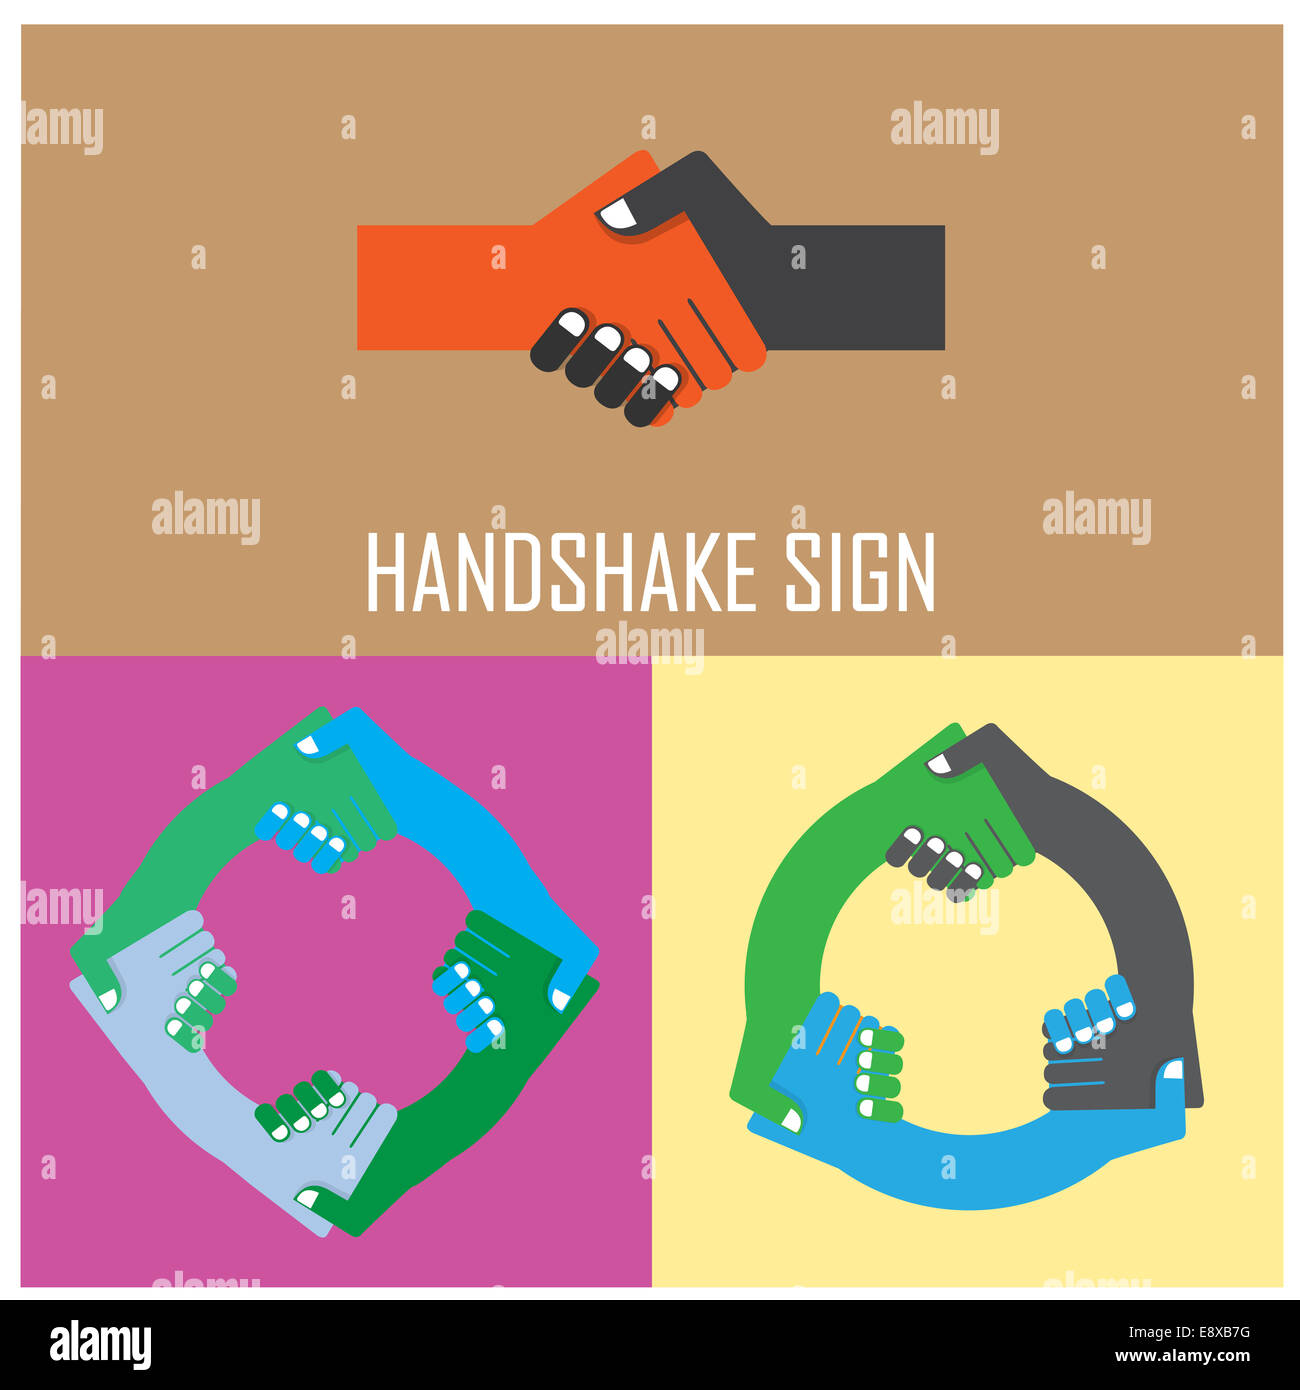 Handshake abstract sign .Partnership symbol. Business creative concept. Stock Photo